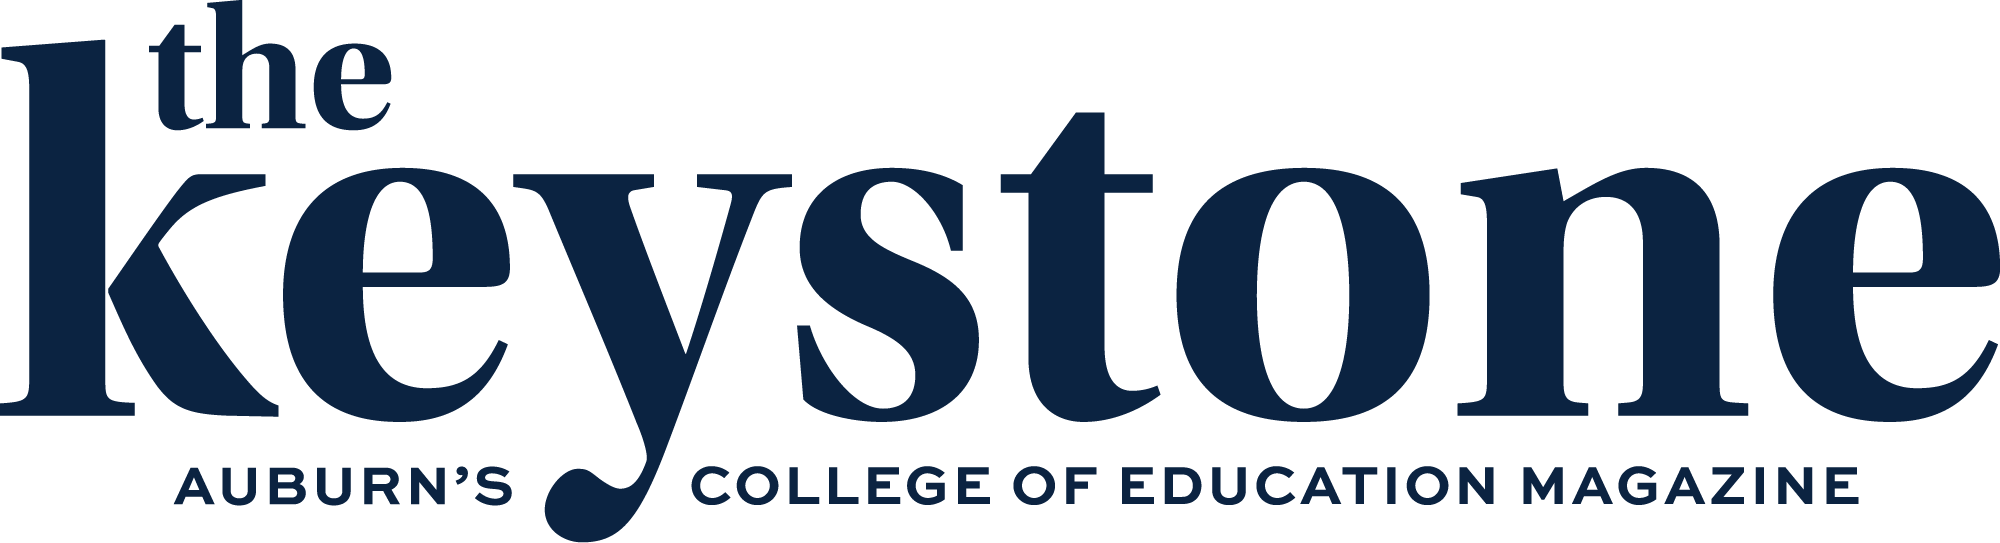 the keystone logo